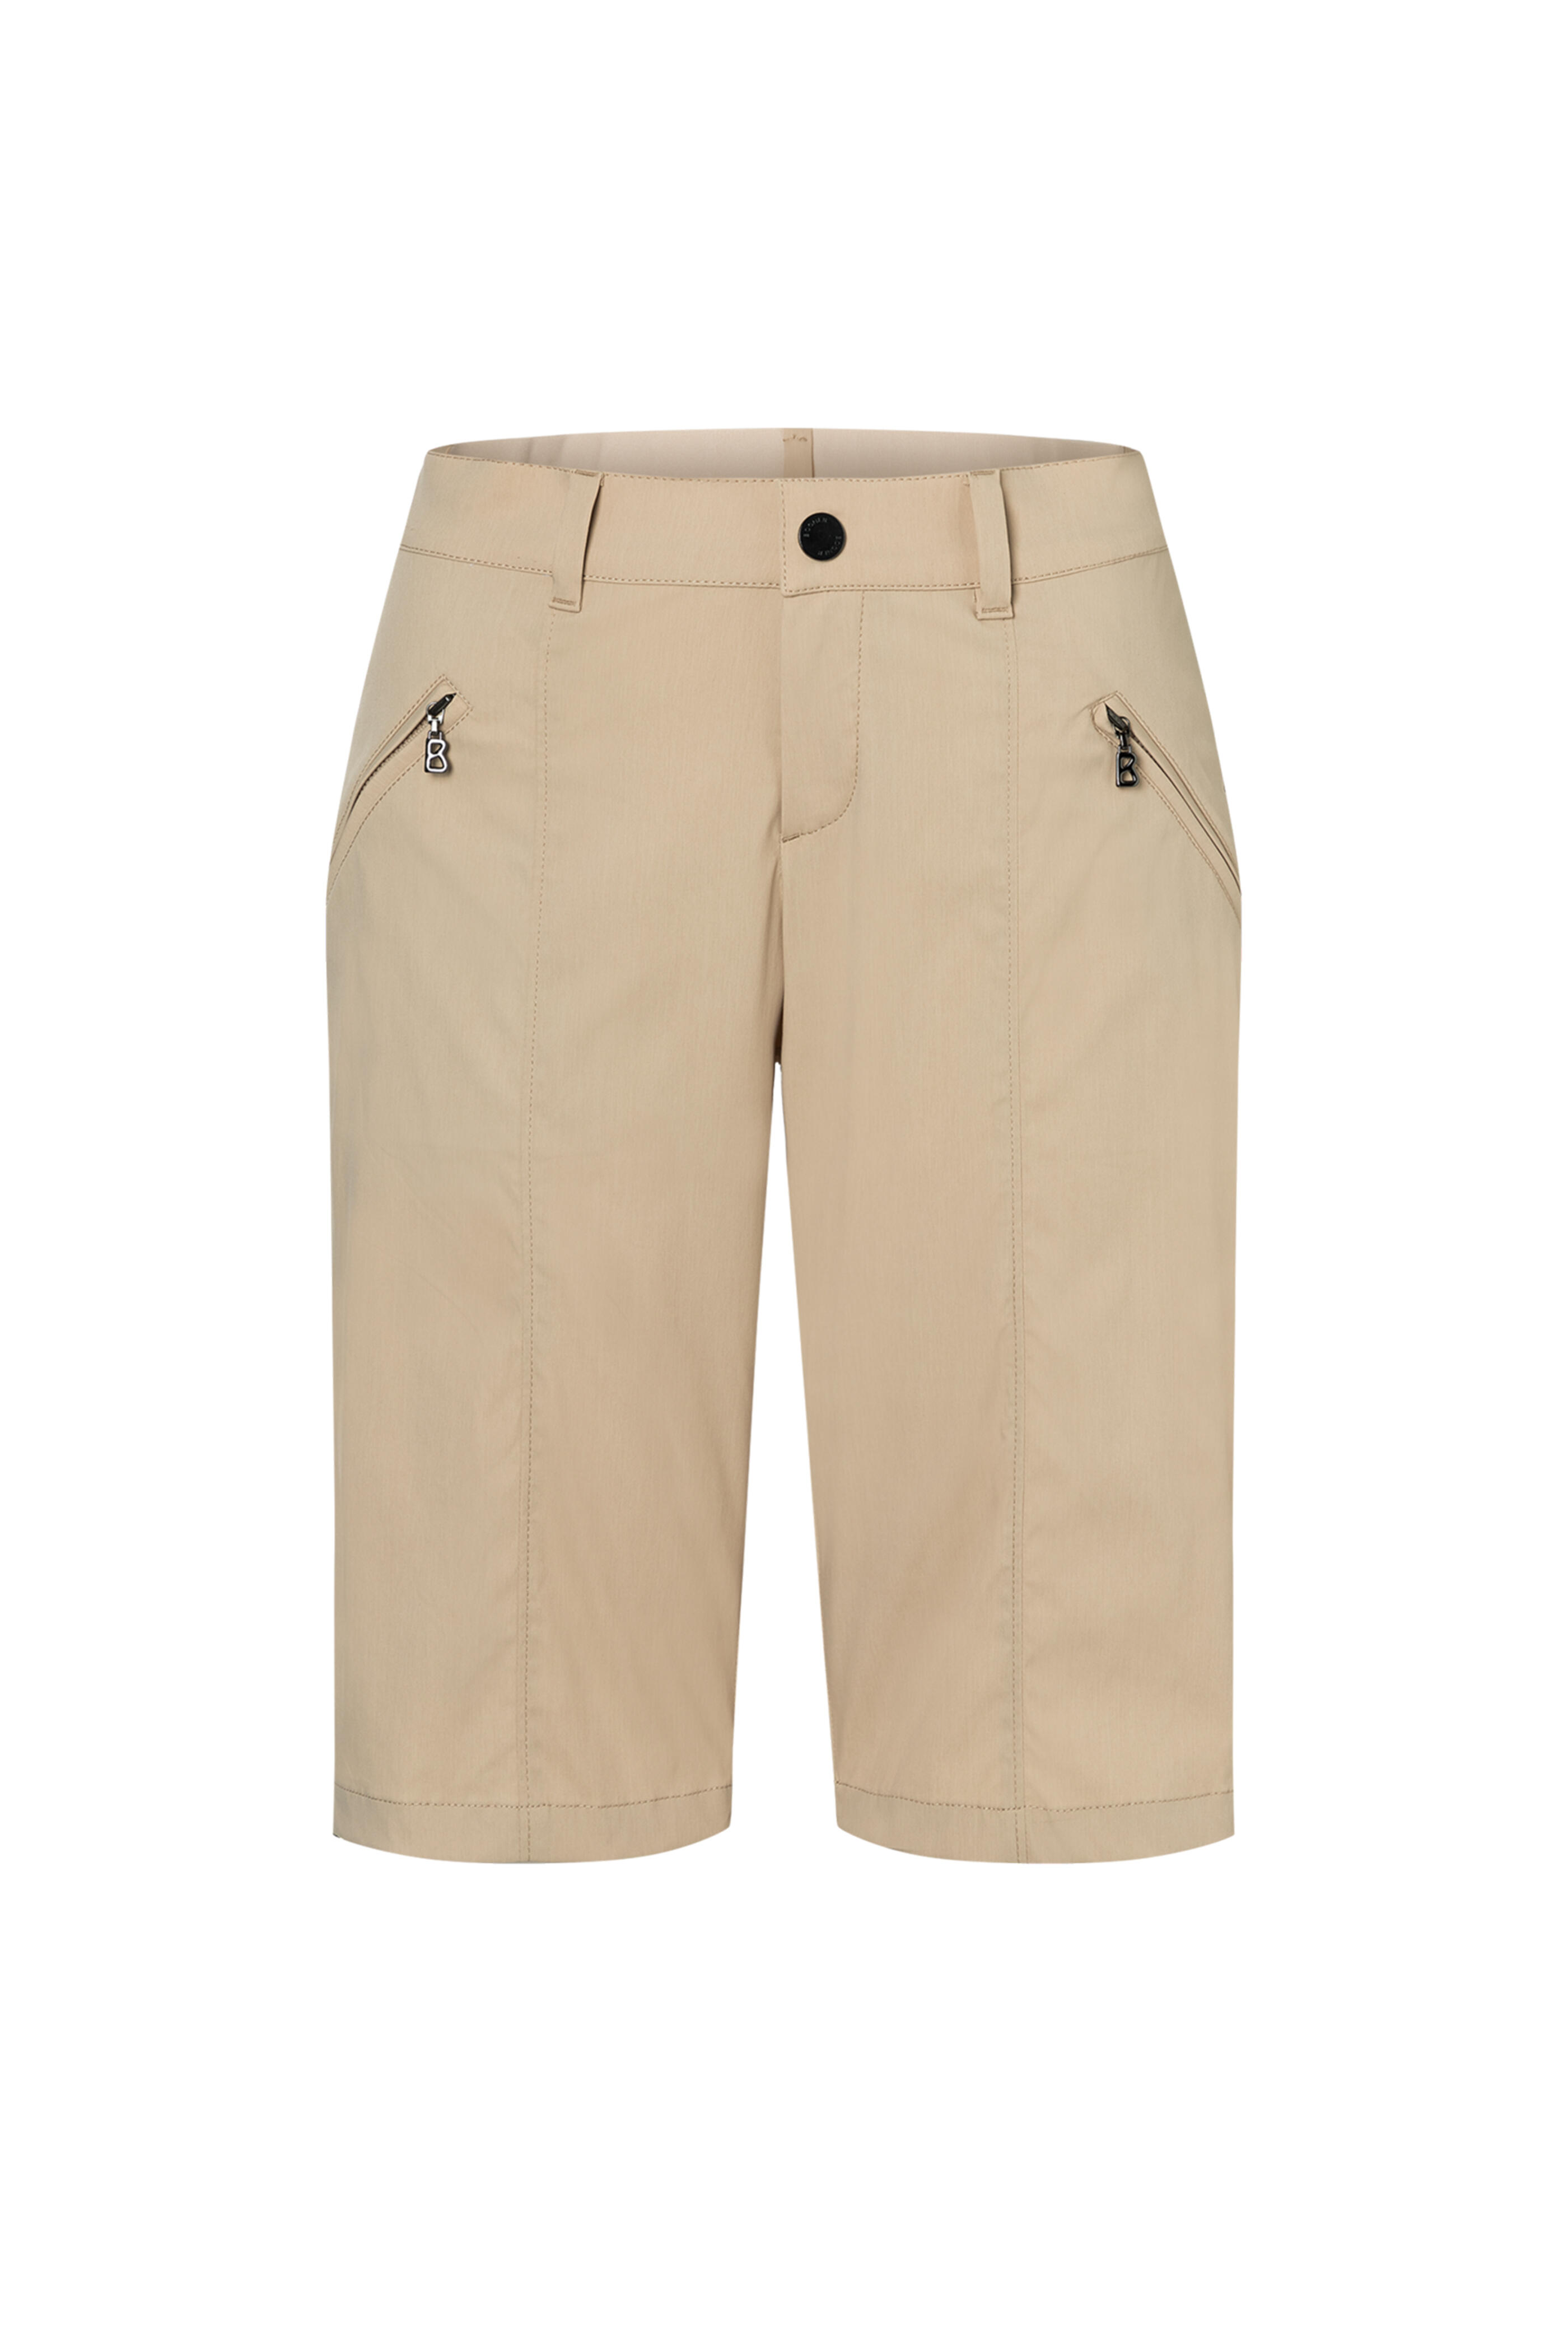 Bogner - Zee1 Desert Sand 2-Way Stretch Bermuda Shorts